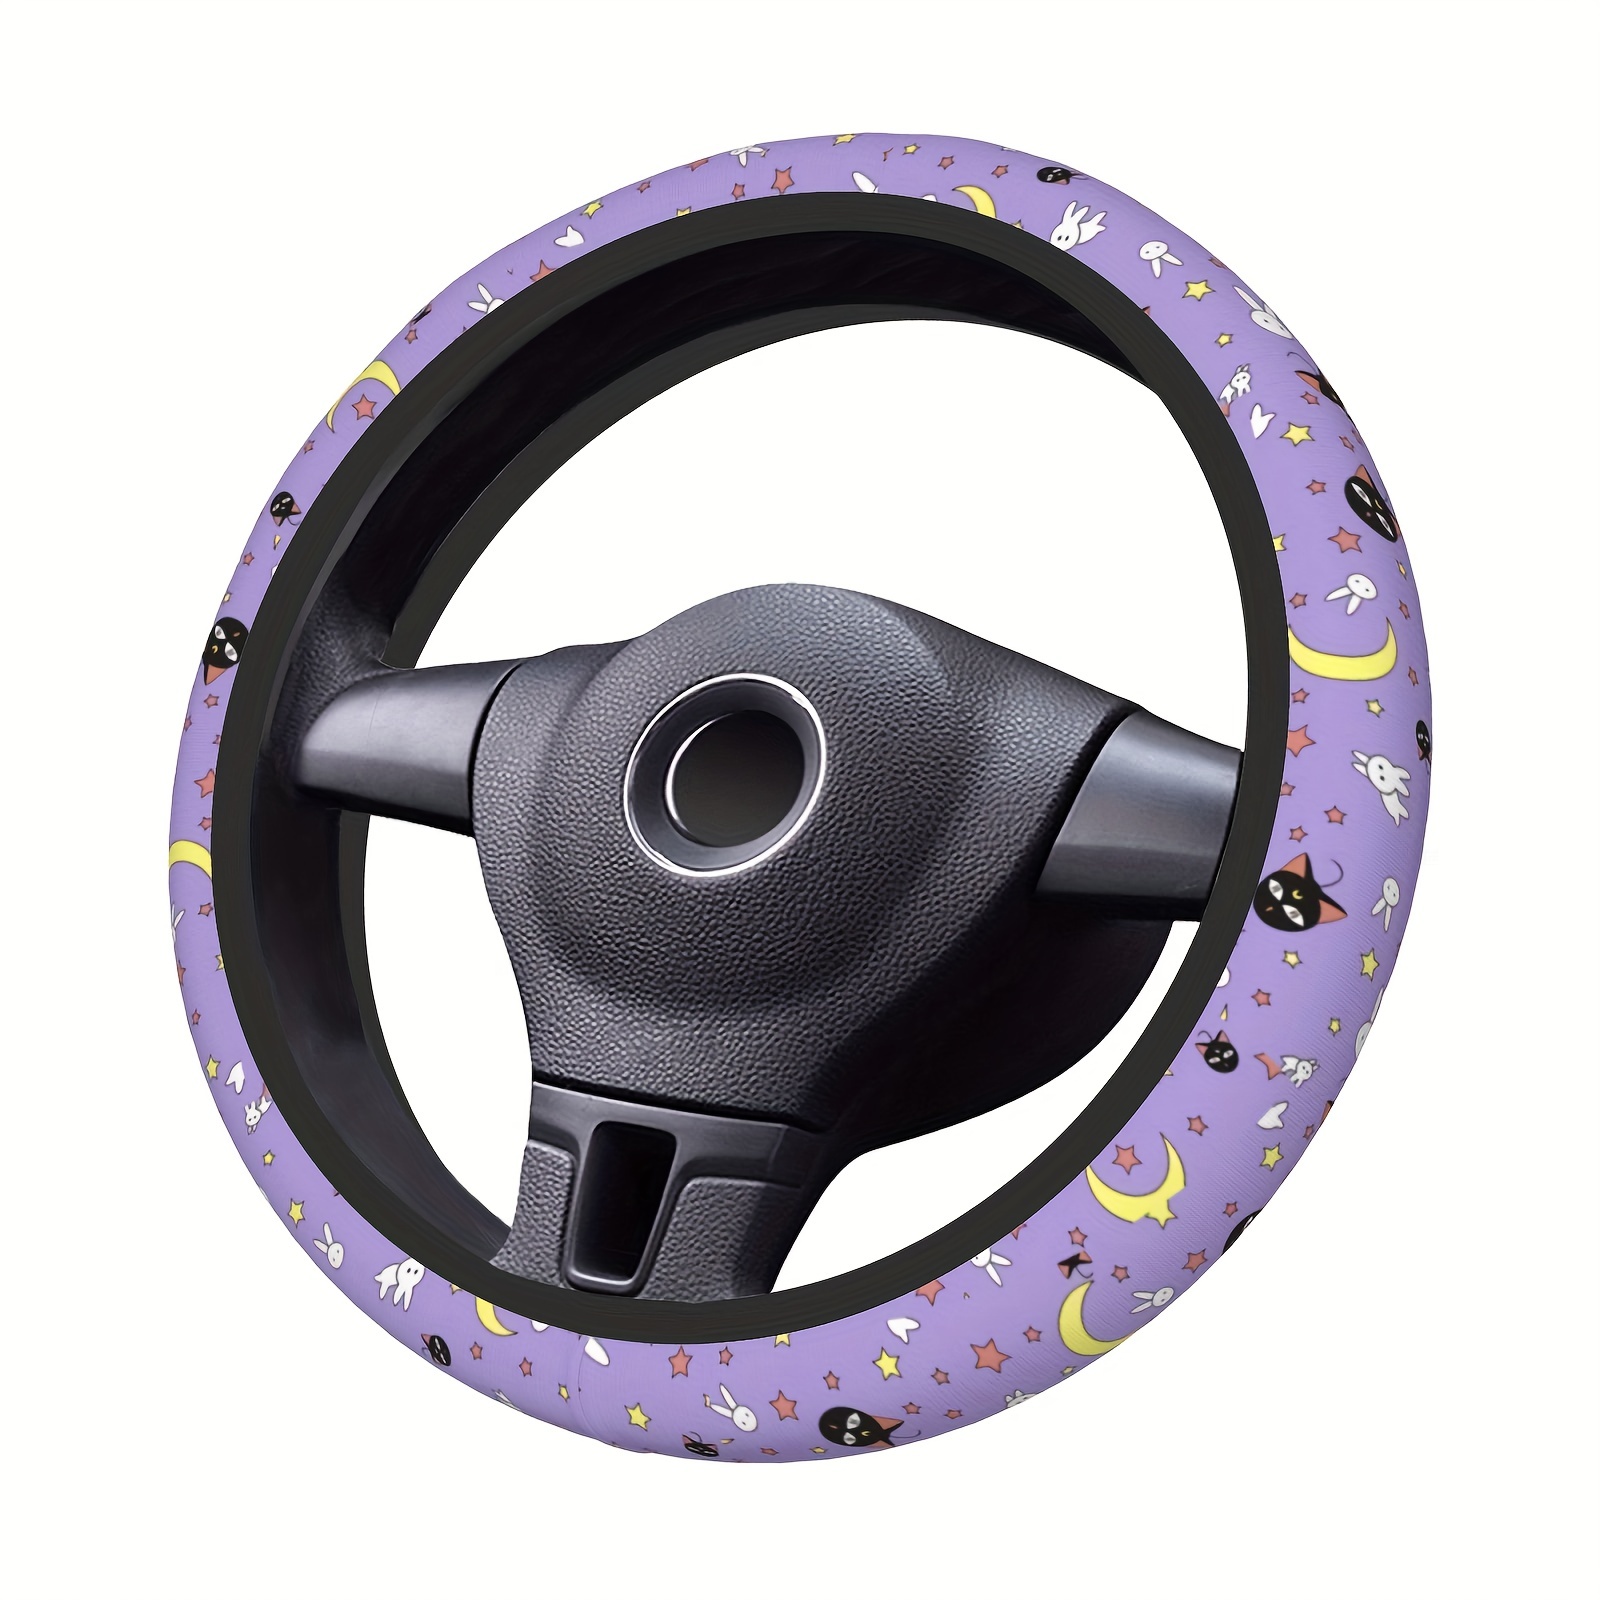 Purple Elephant Steering Wheel Cover Women Girl Car Accessories Interior Universal 15 inch Auto Anti-Slip Protector for Truck at MechanicSurplus.com